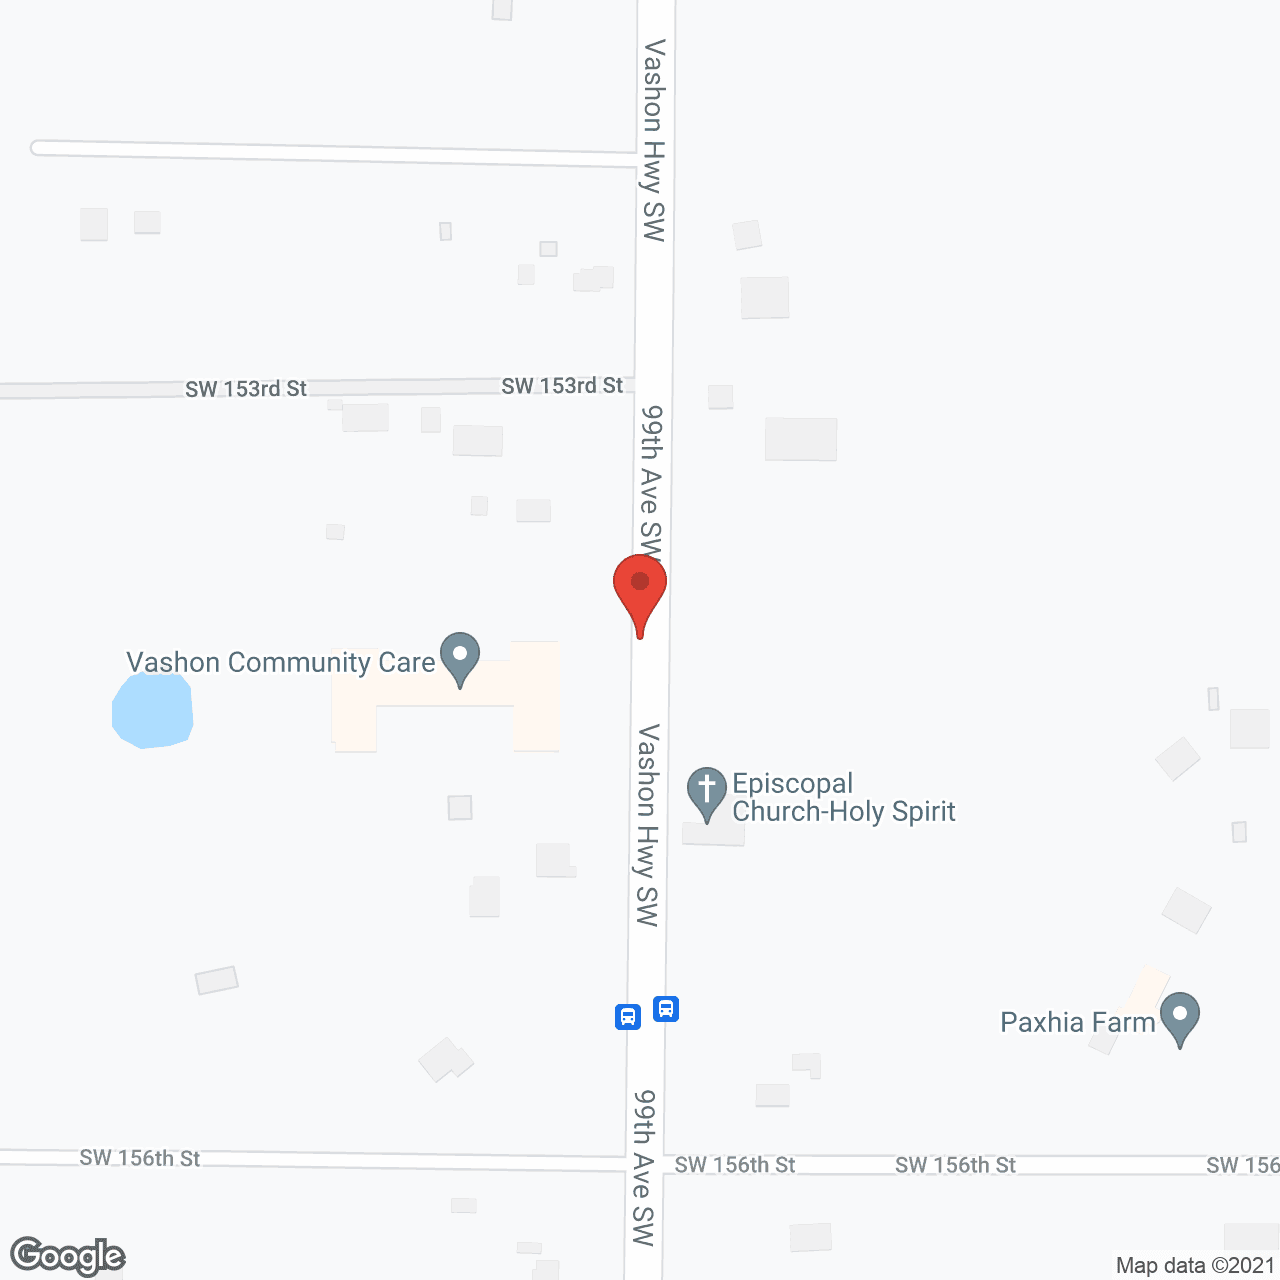 Vashon Community Care in google map